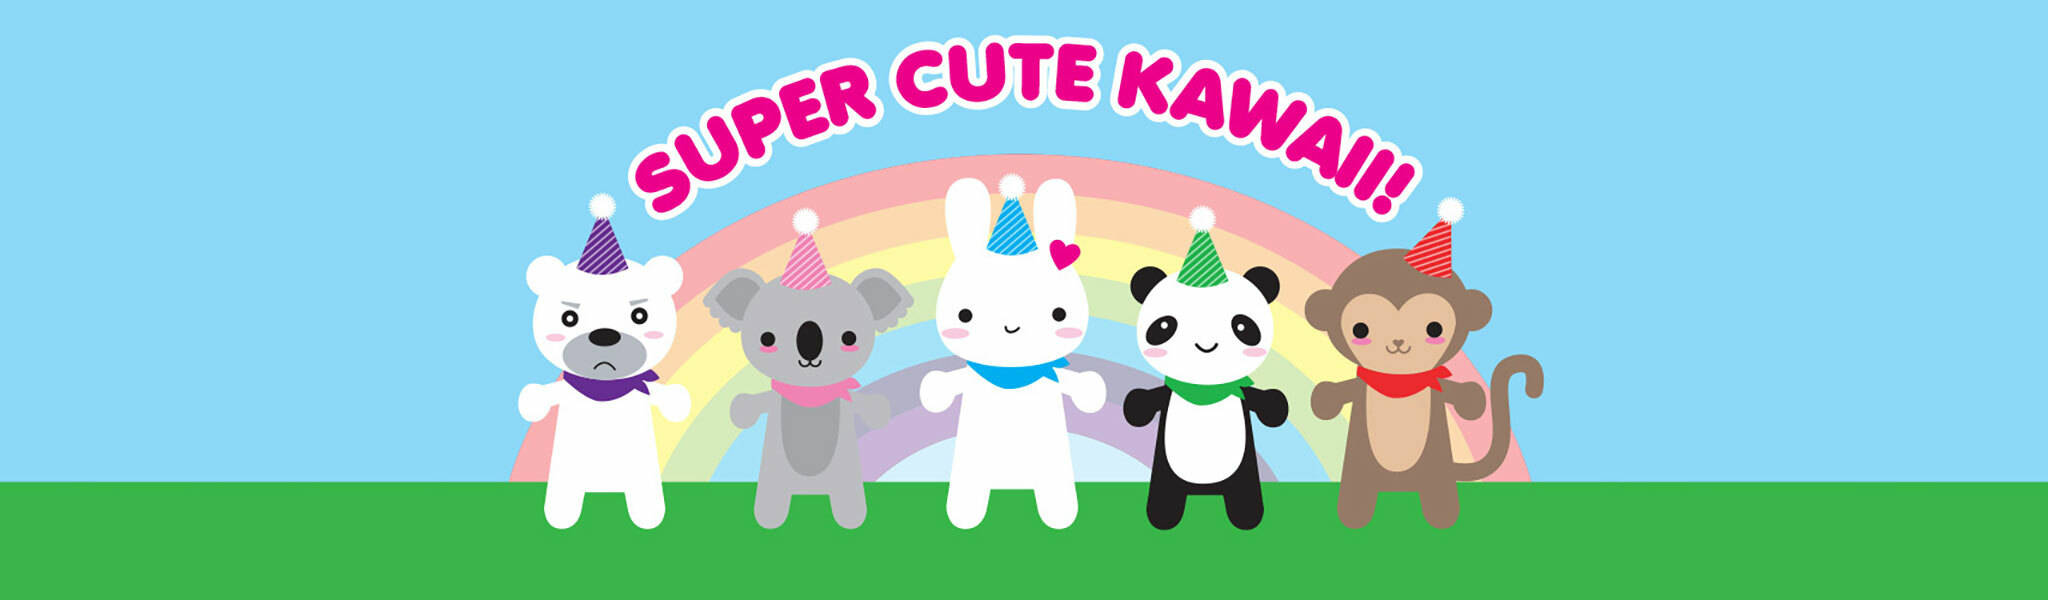 Super Cute Kawaii Characters With Rainbow Background